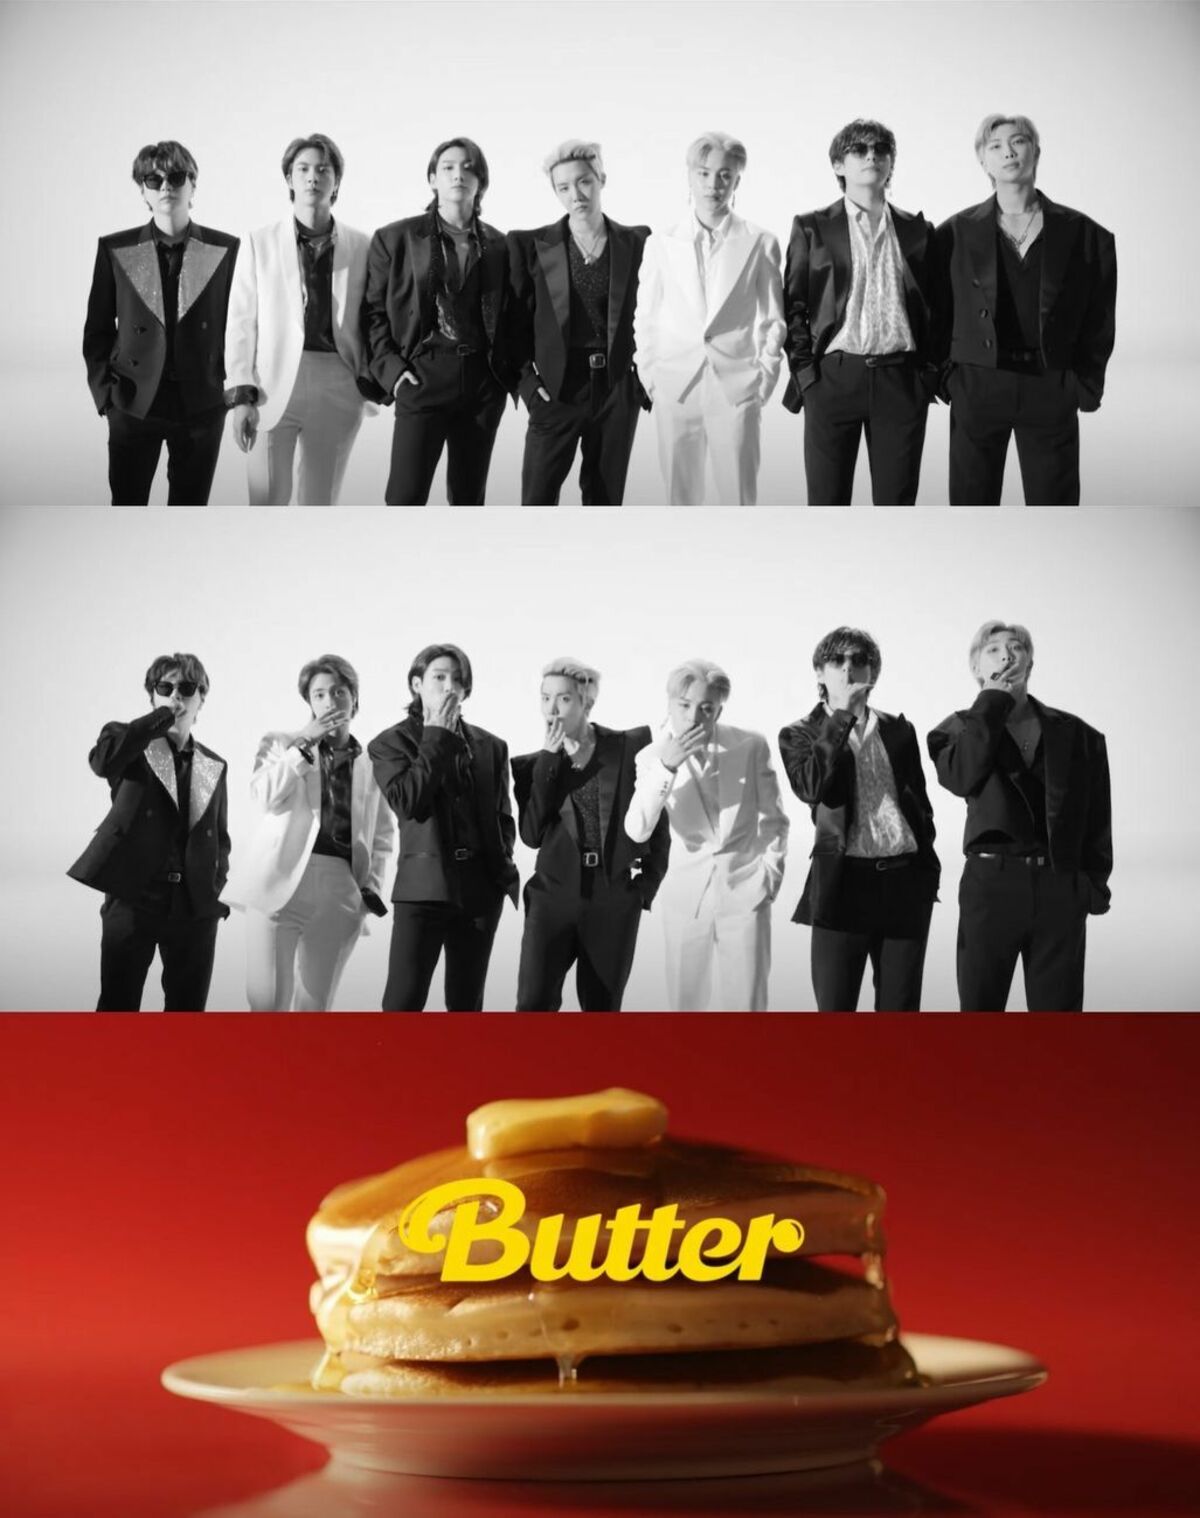 Bts Butter Mvティーザー公開 強烈な白黒グループショット披露 韓流 K Pop Abema Times